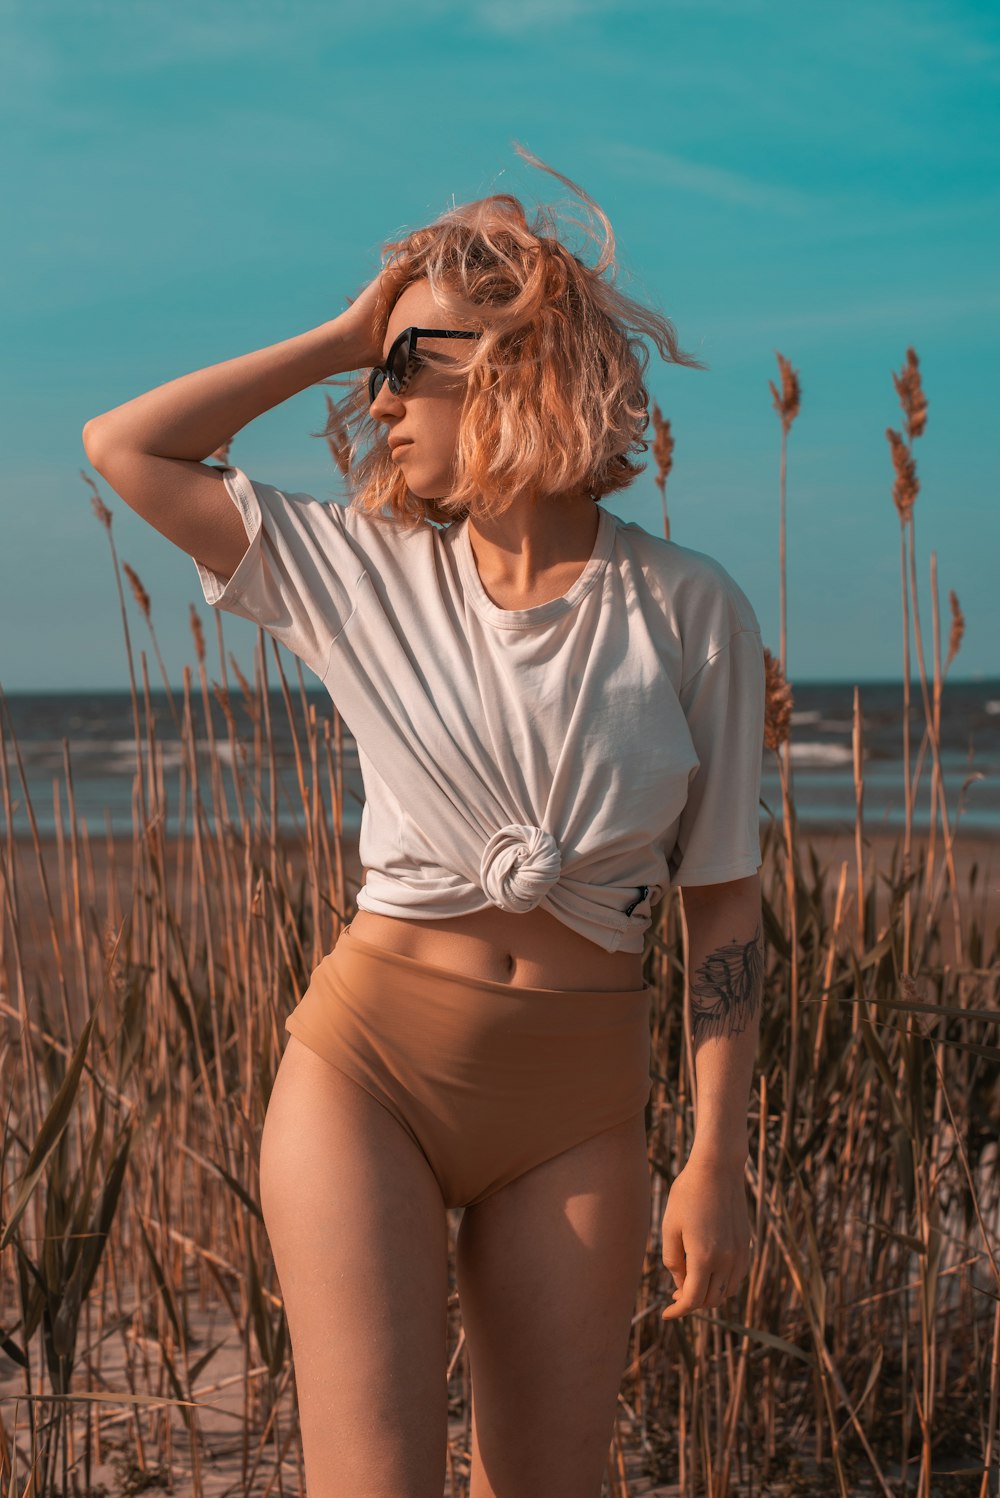 a woman in a short skirt standing on a beach